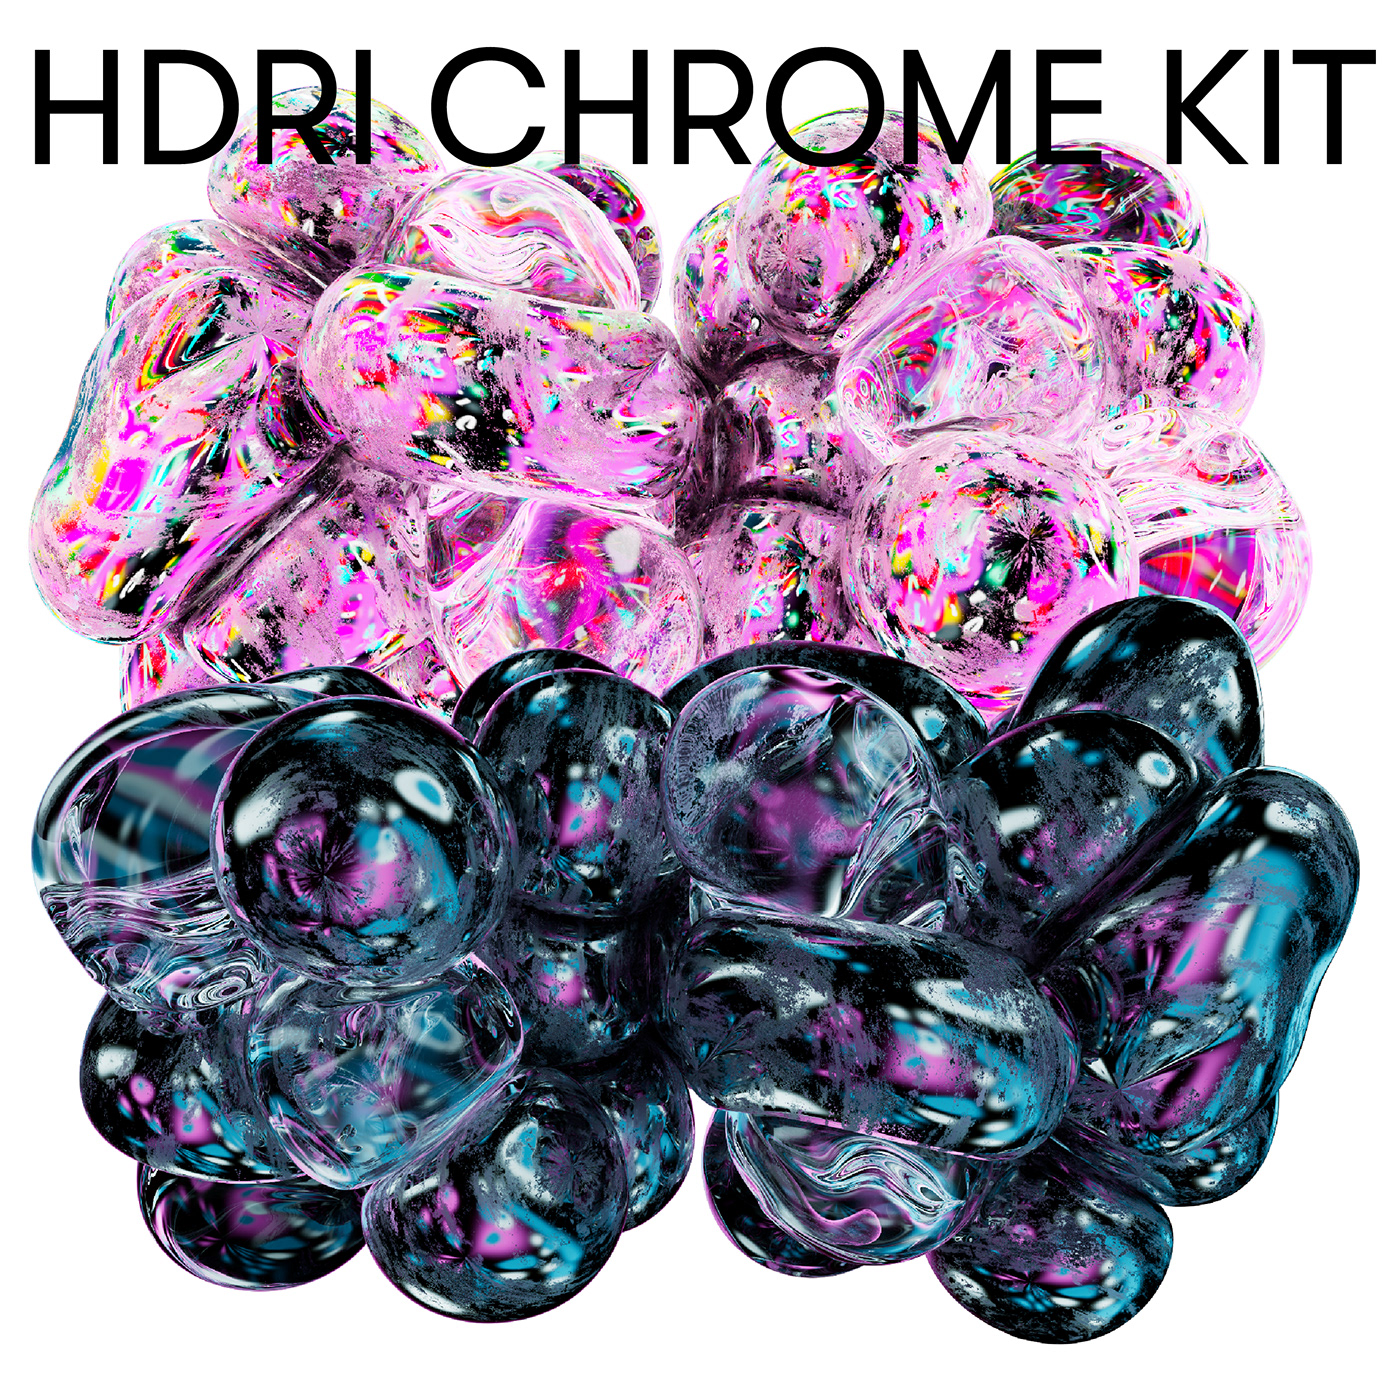 free chrome kit